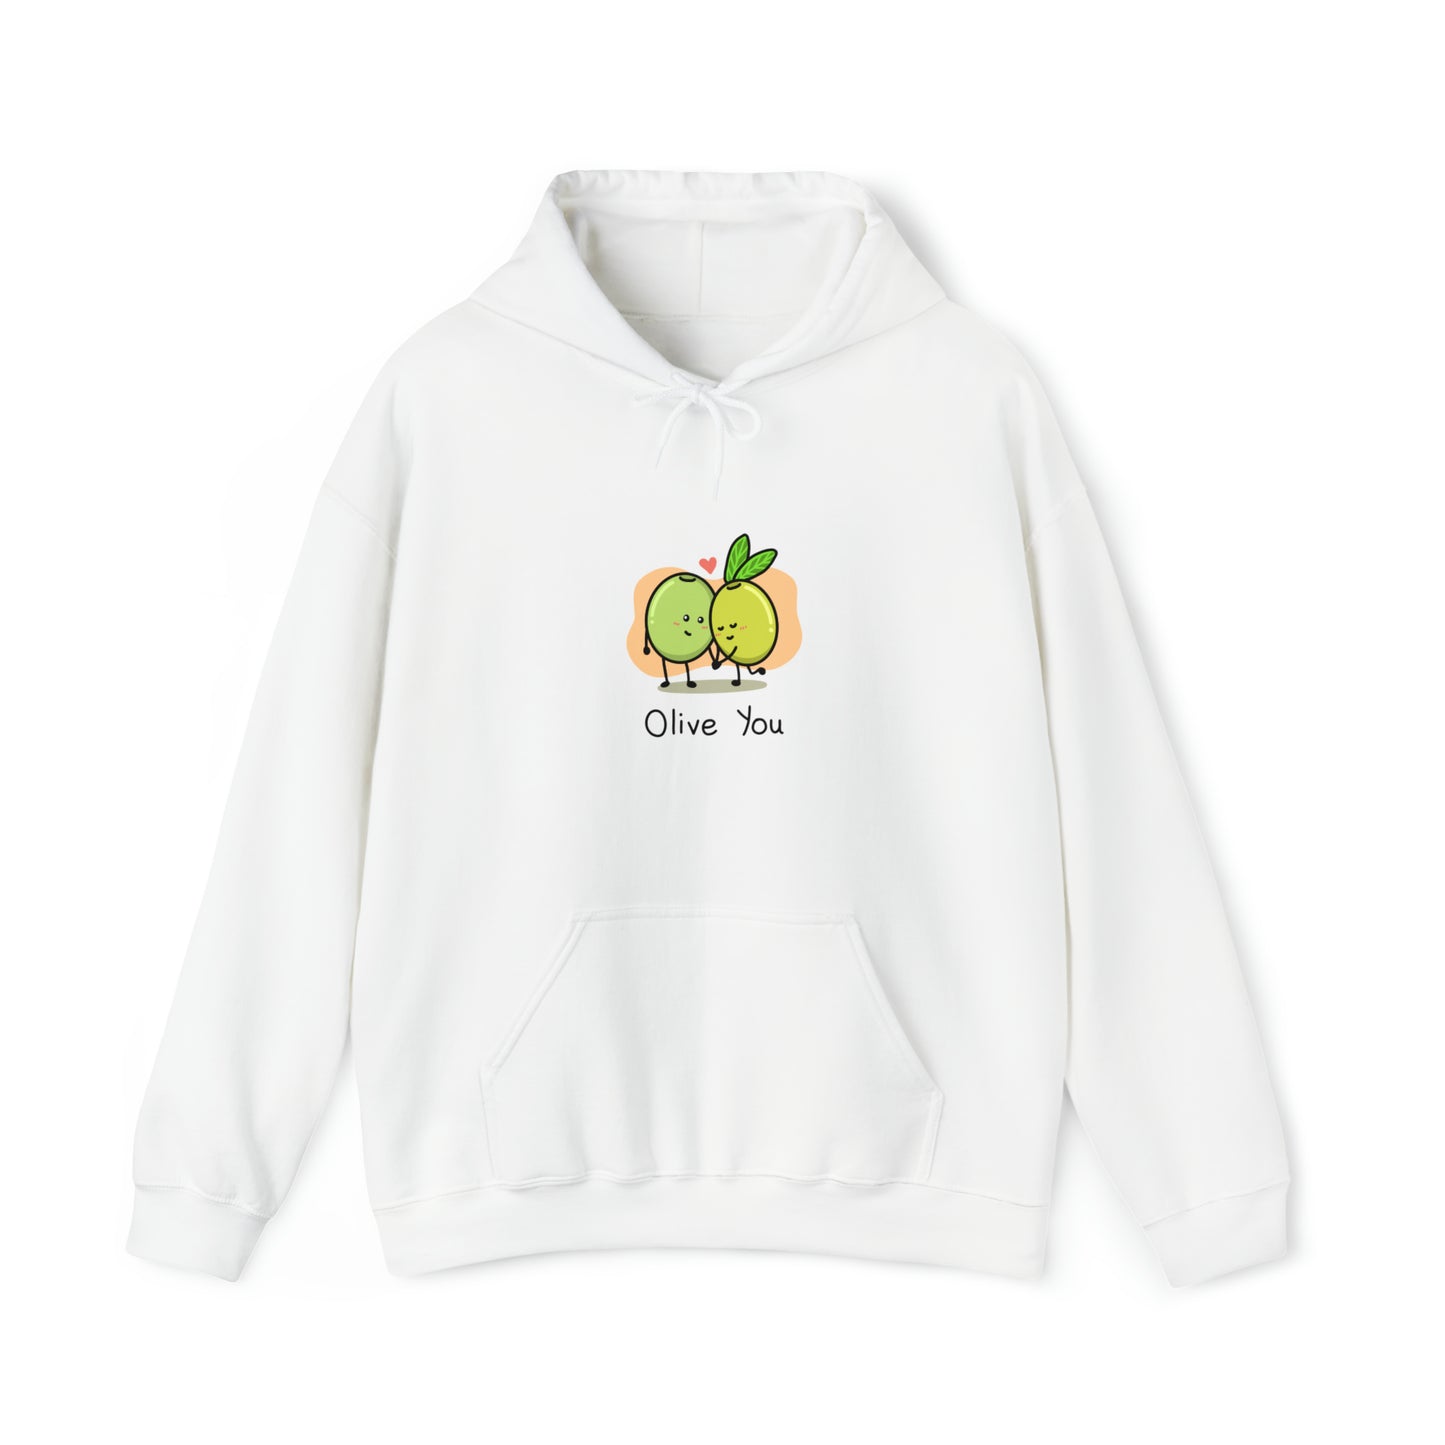 Custom Parody Hooded Sweatshirt, Olive you design